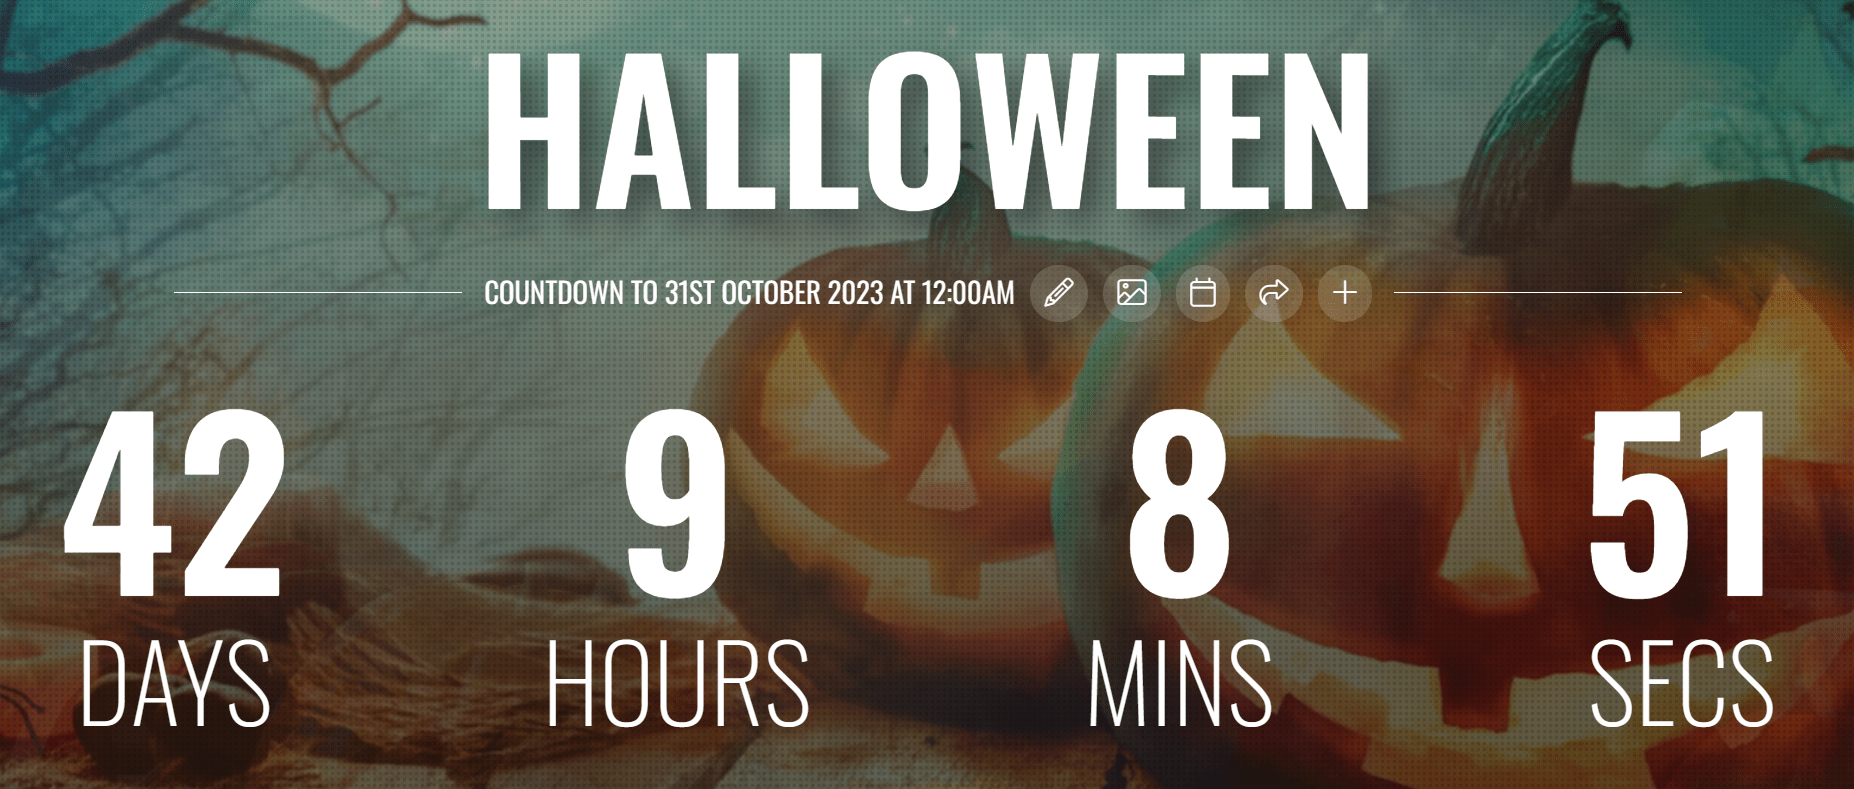 Halloween Countdown Timer holiday marketing ideas